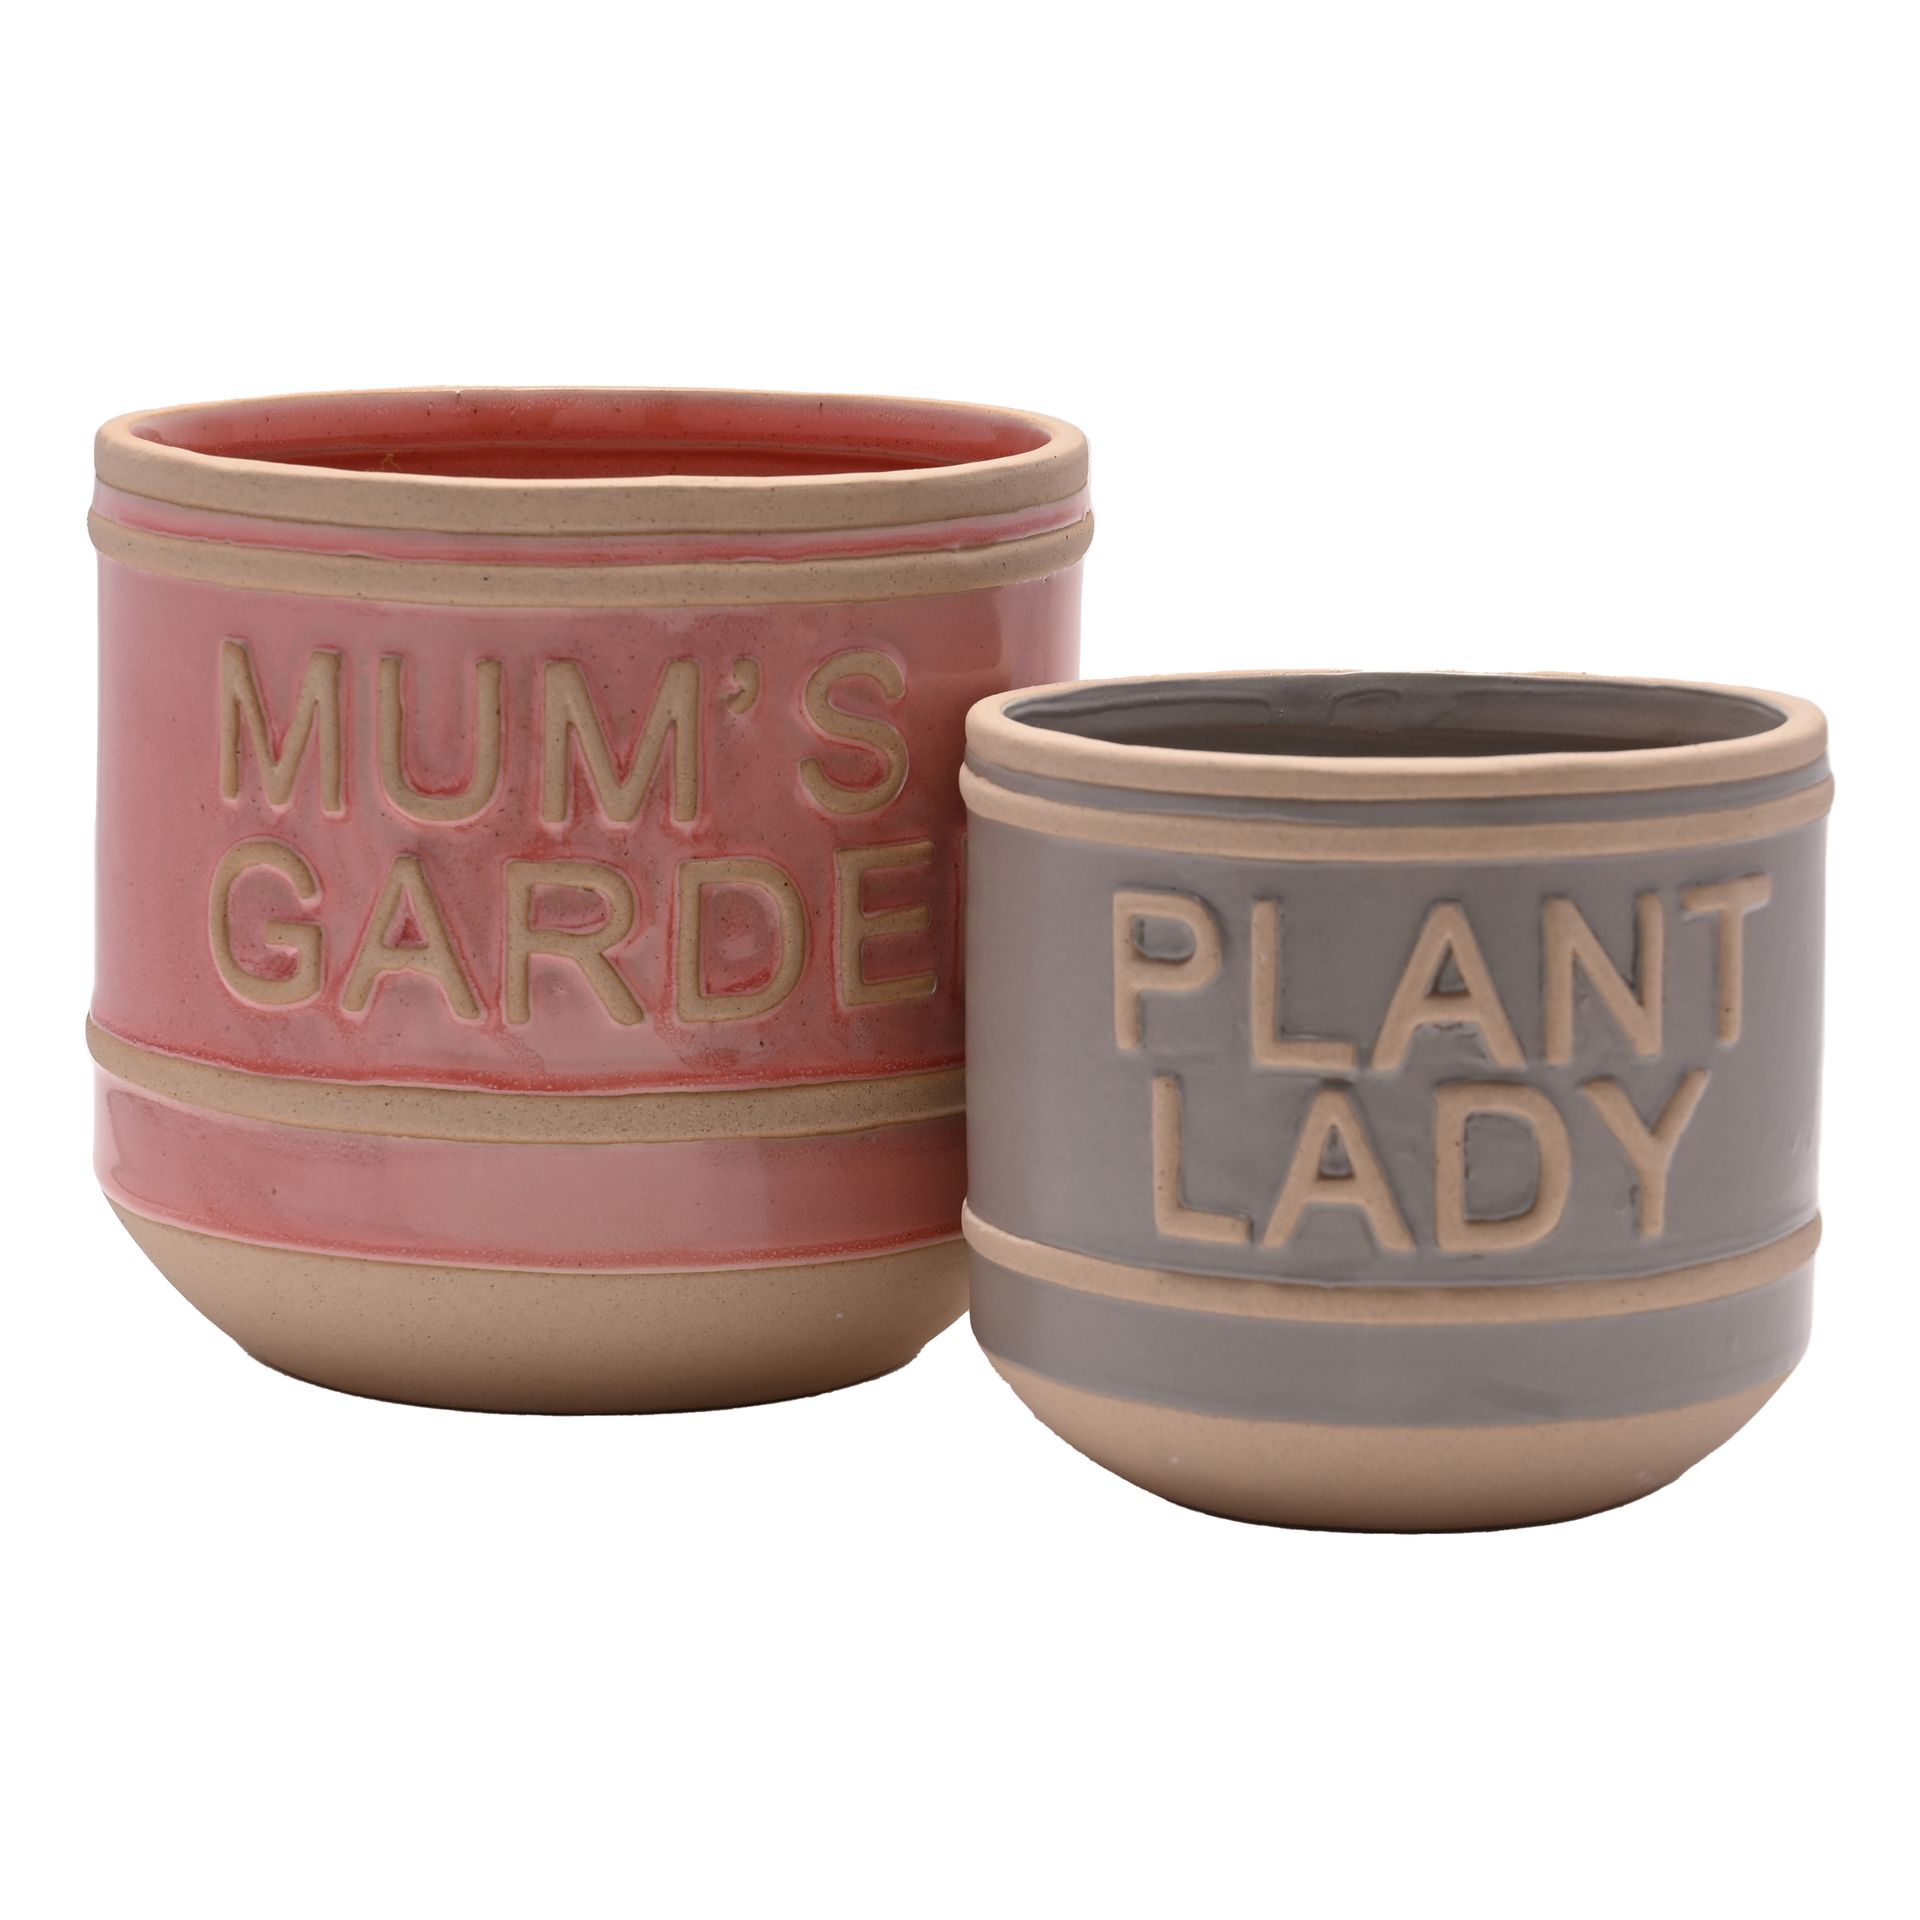 Widdop Set of 2 Ceramic Mum's Garden & Plant Lady Planters